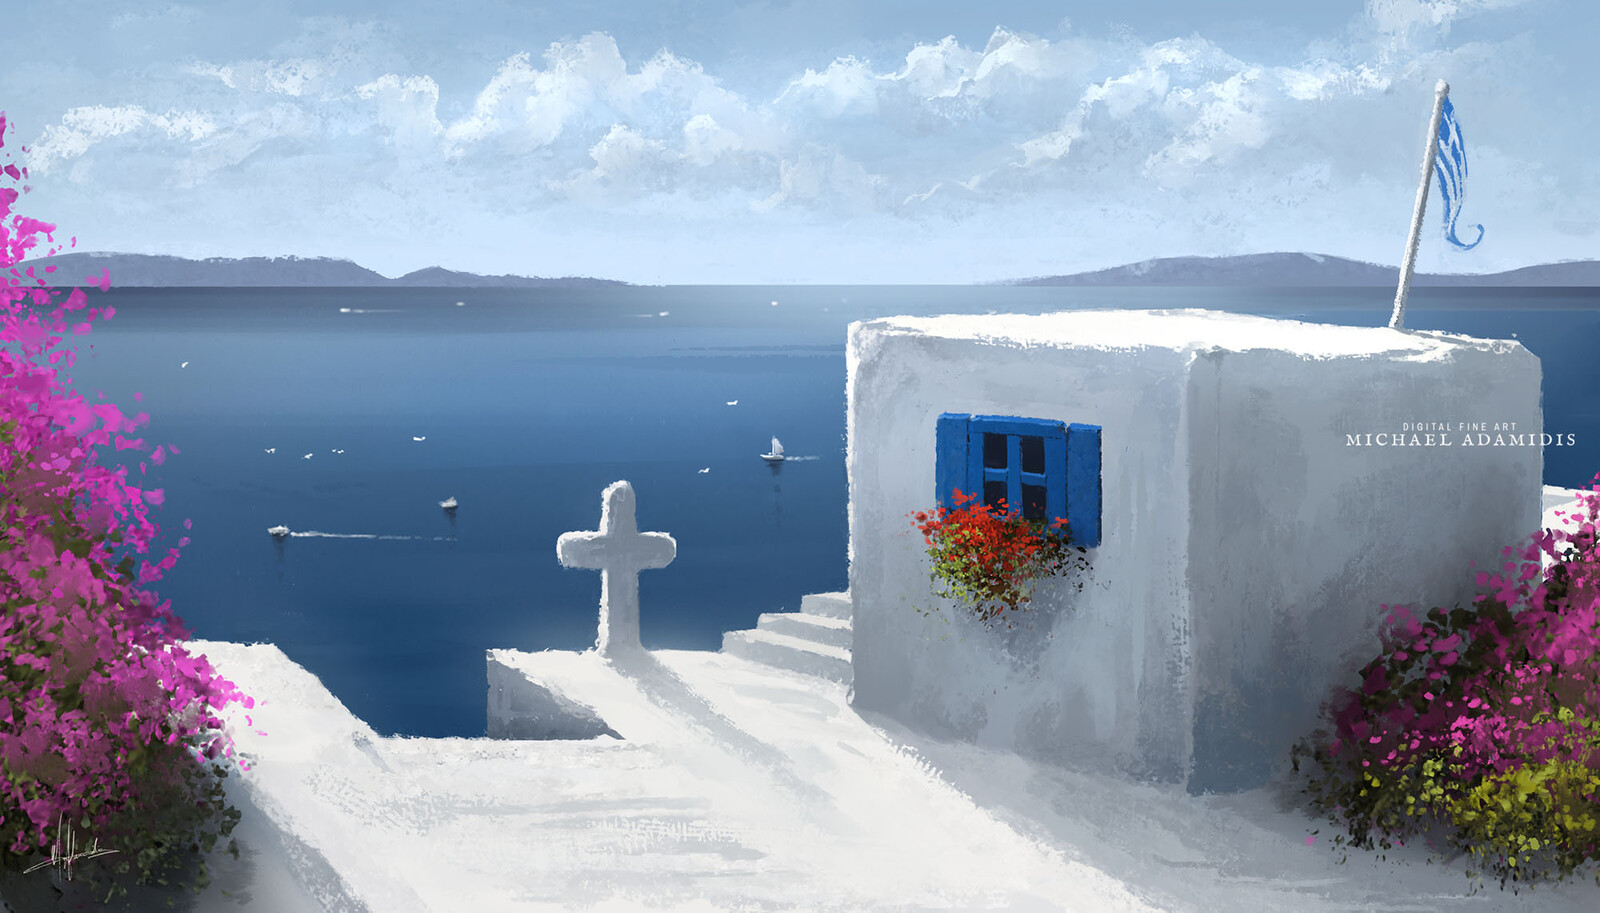 Santorini, Greece - Digital Art Landscape Painting